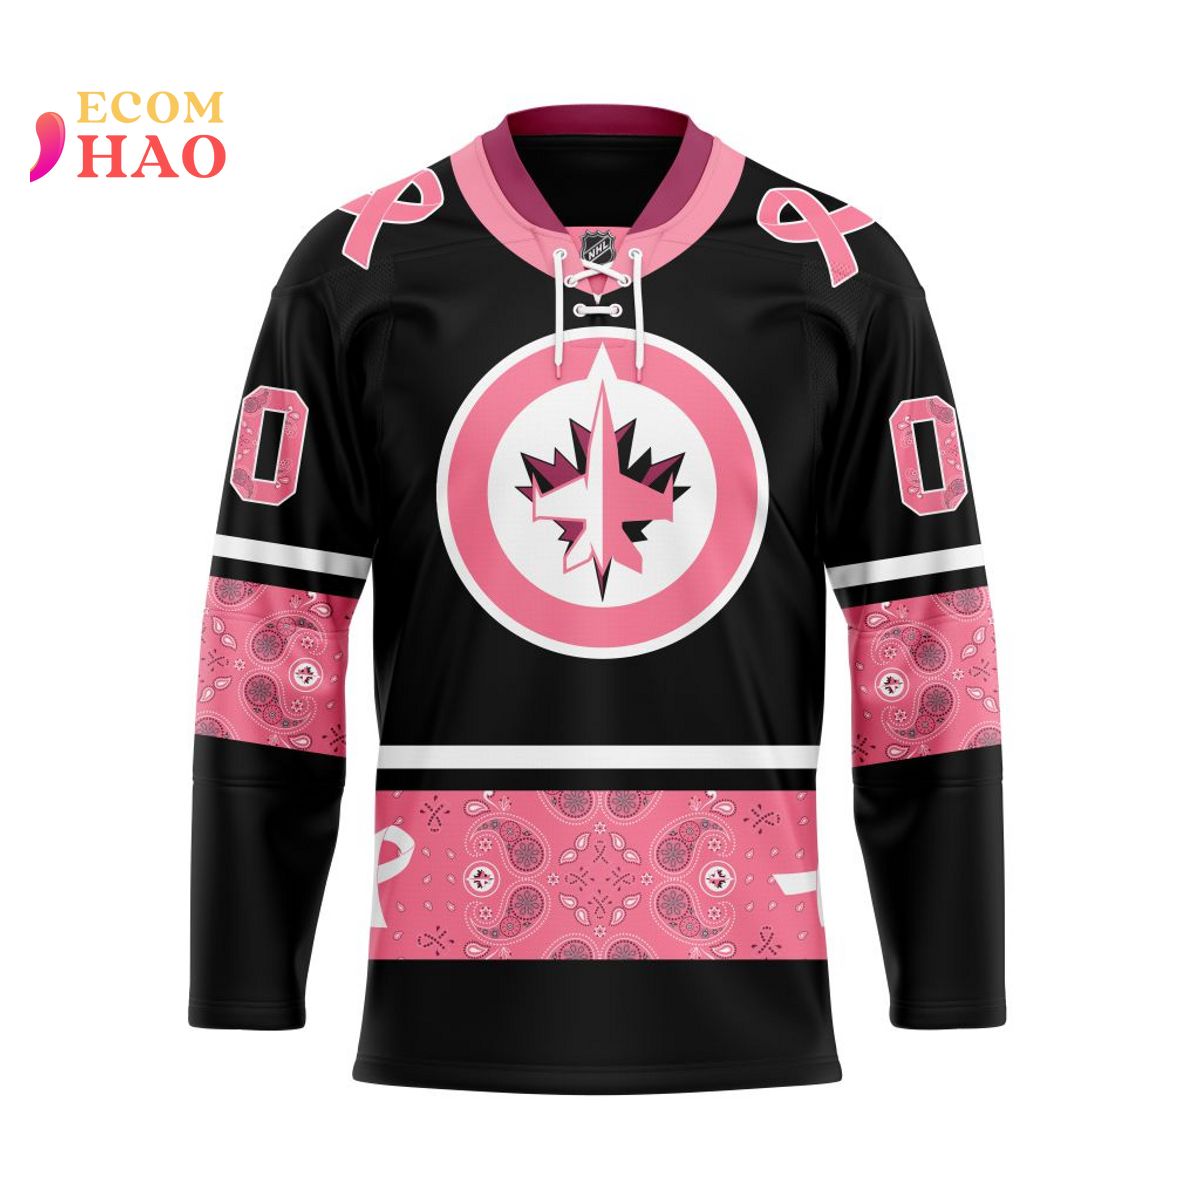 Winnipeg Jets NHL Flower Hawaiian Shirt Impressive Gift For Fans -  YesItCustom